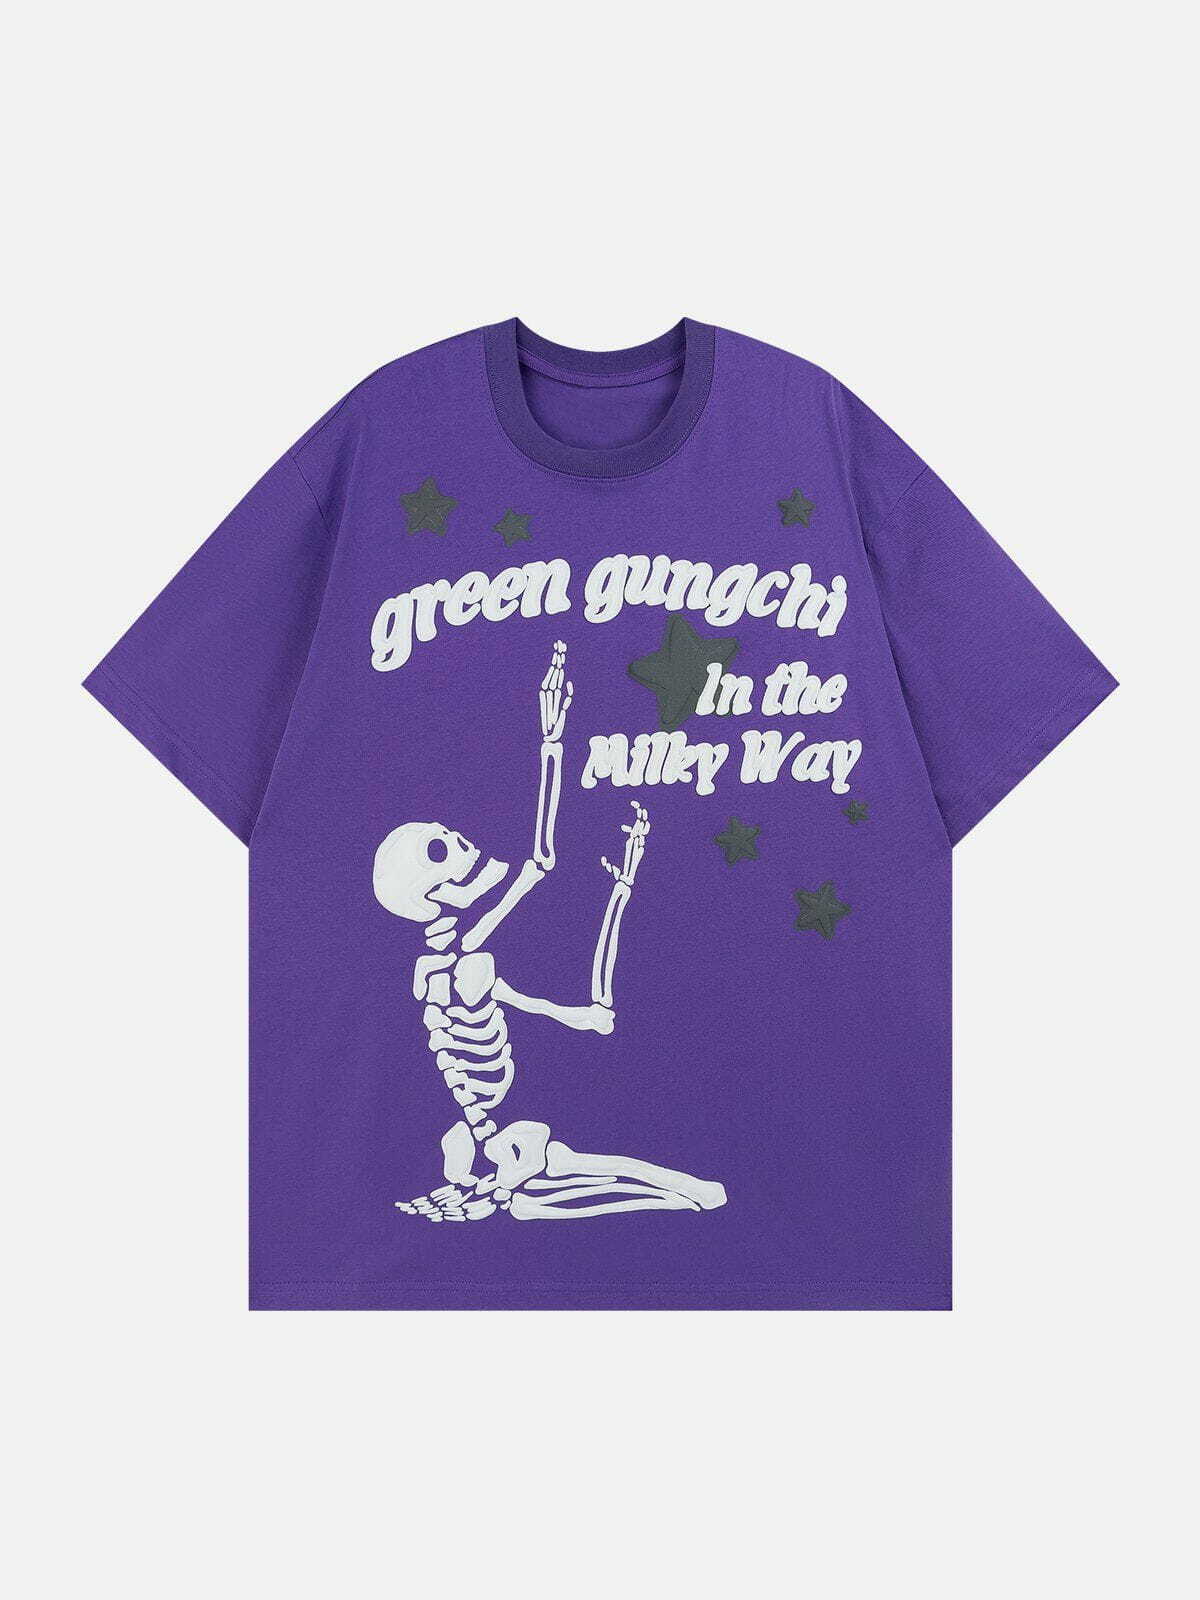 retro skeleton tee edgy  vibrant streetwear shirt 3478